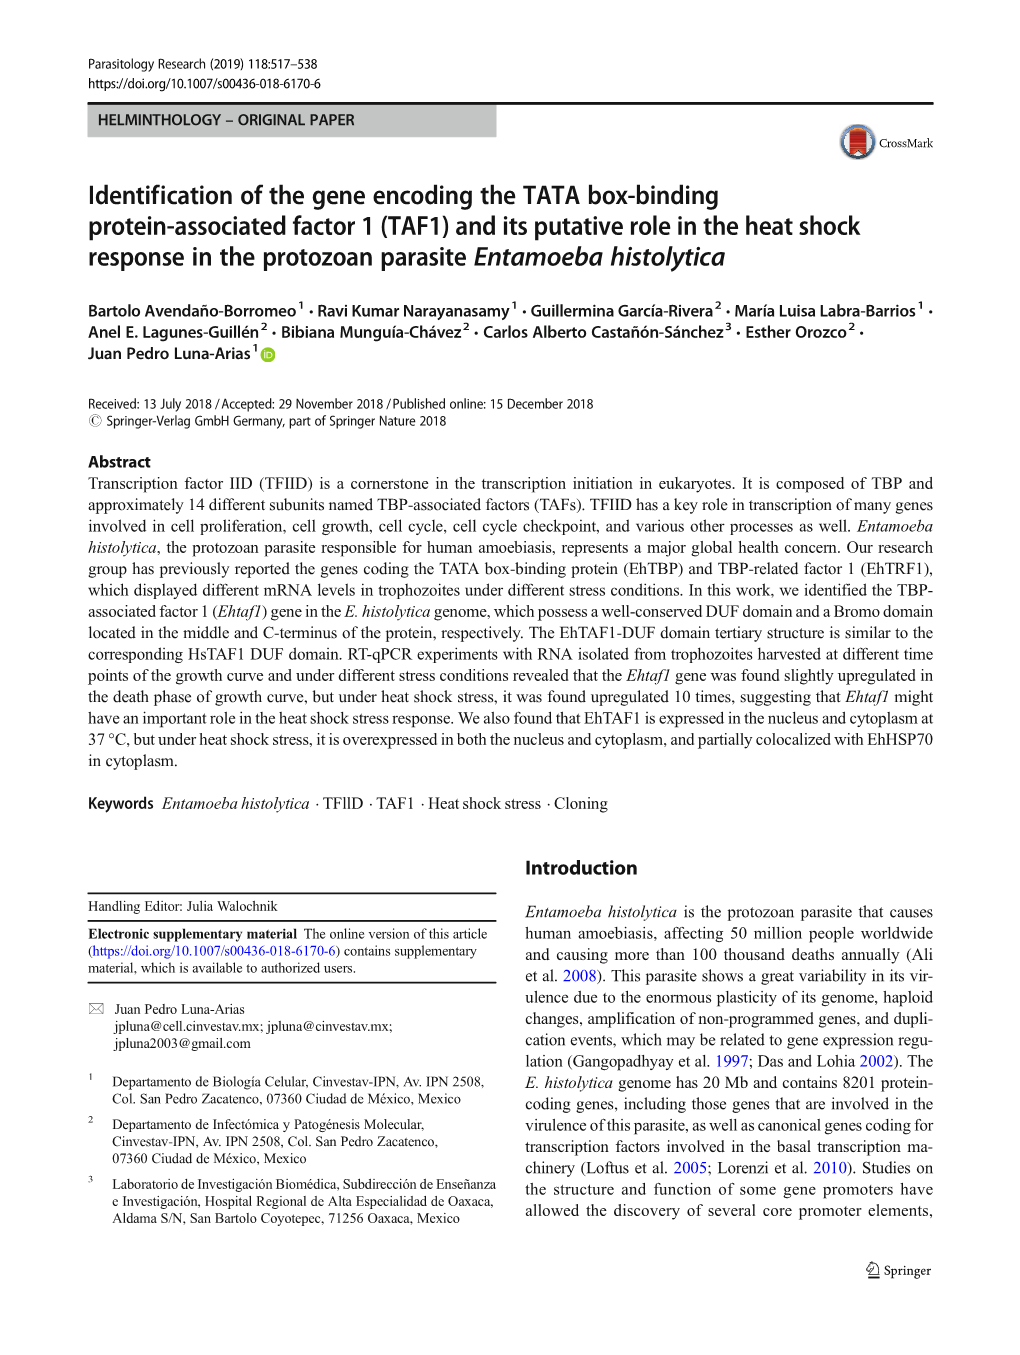 Identification of the Gene Encoding the TATA Box-Binding Protein